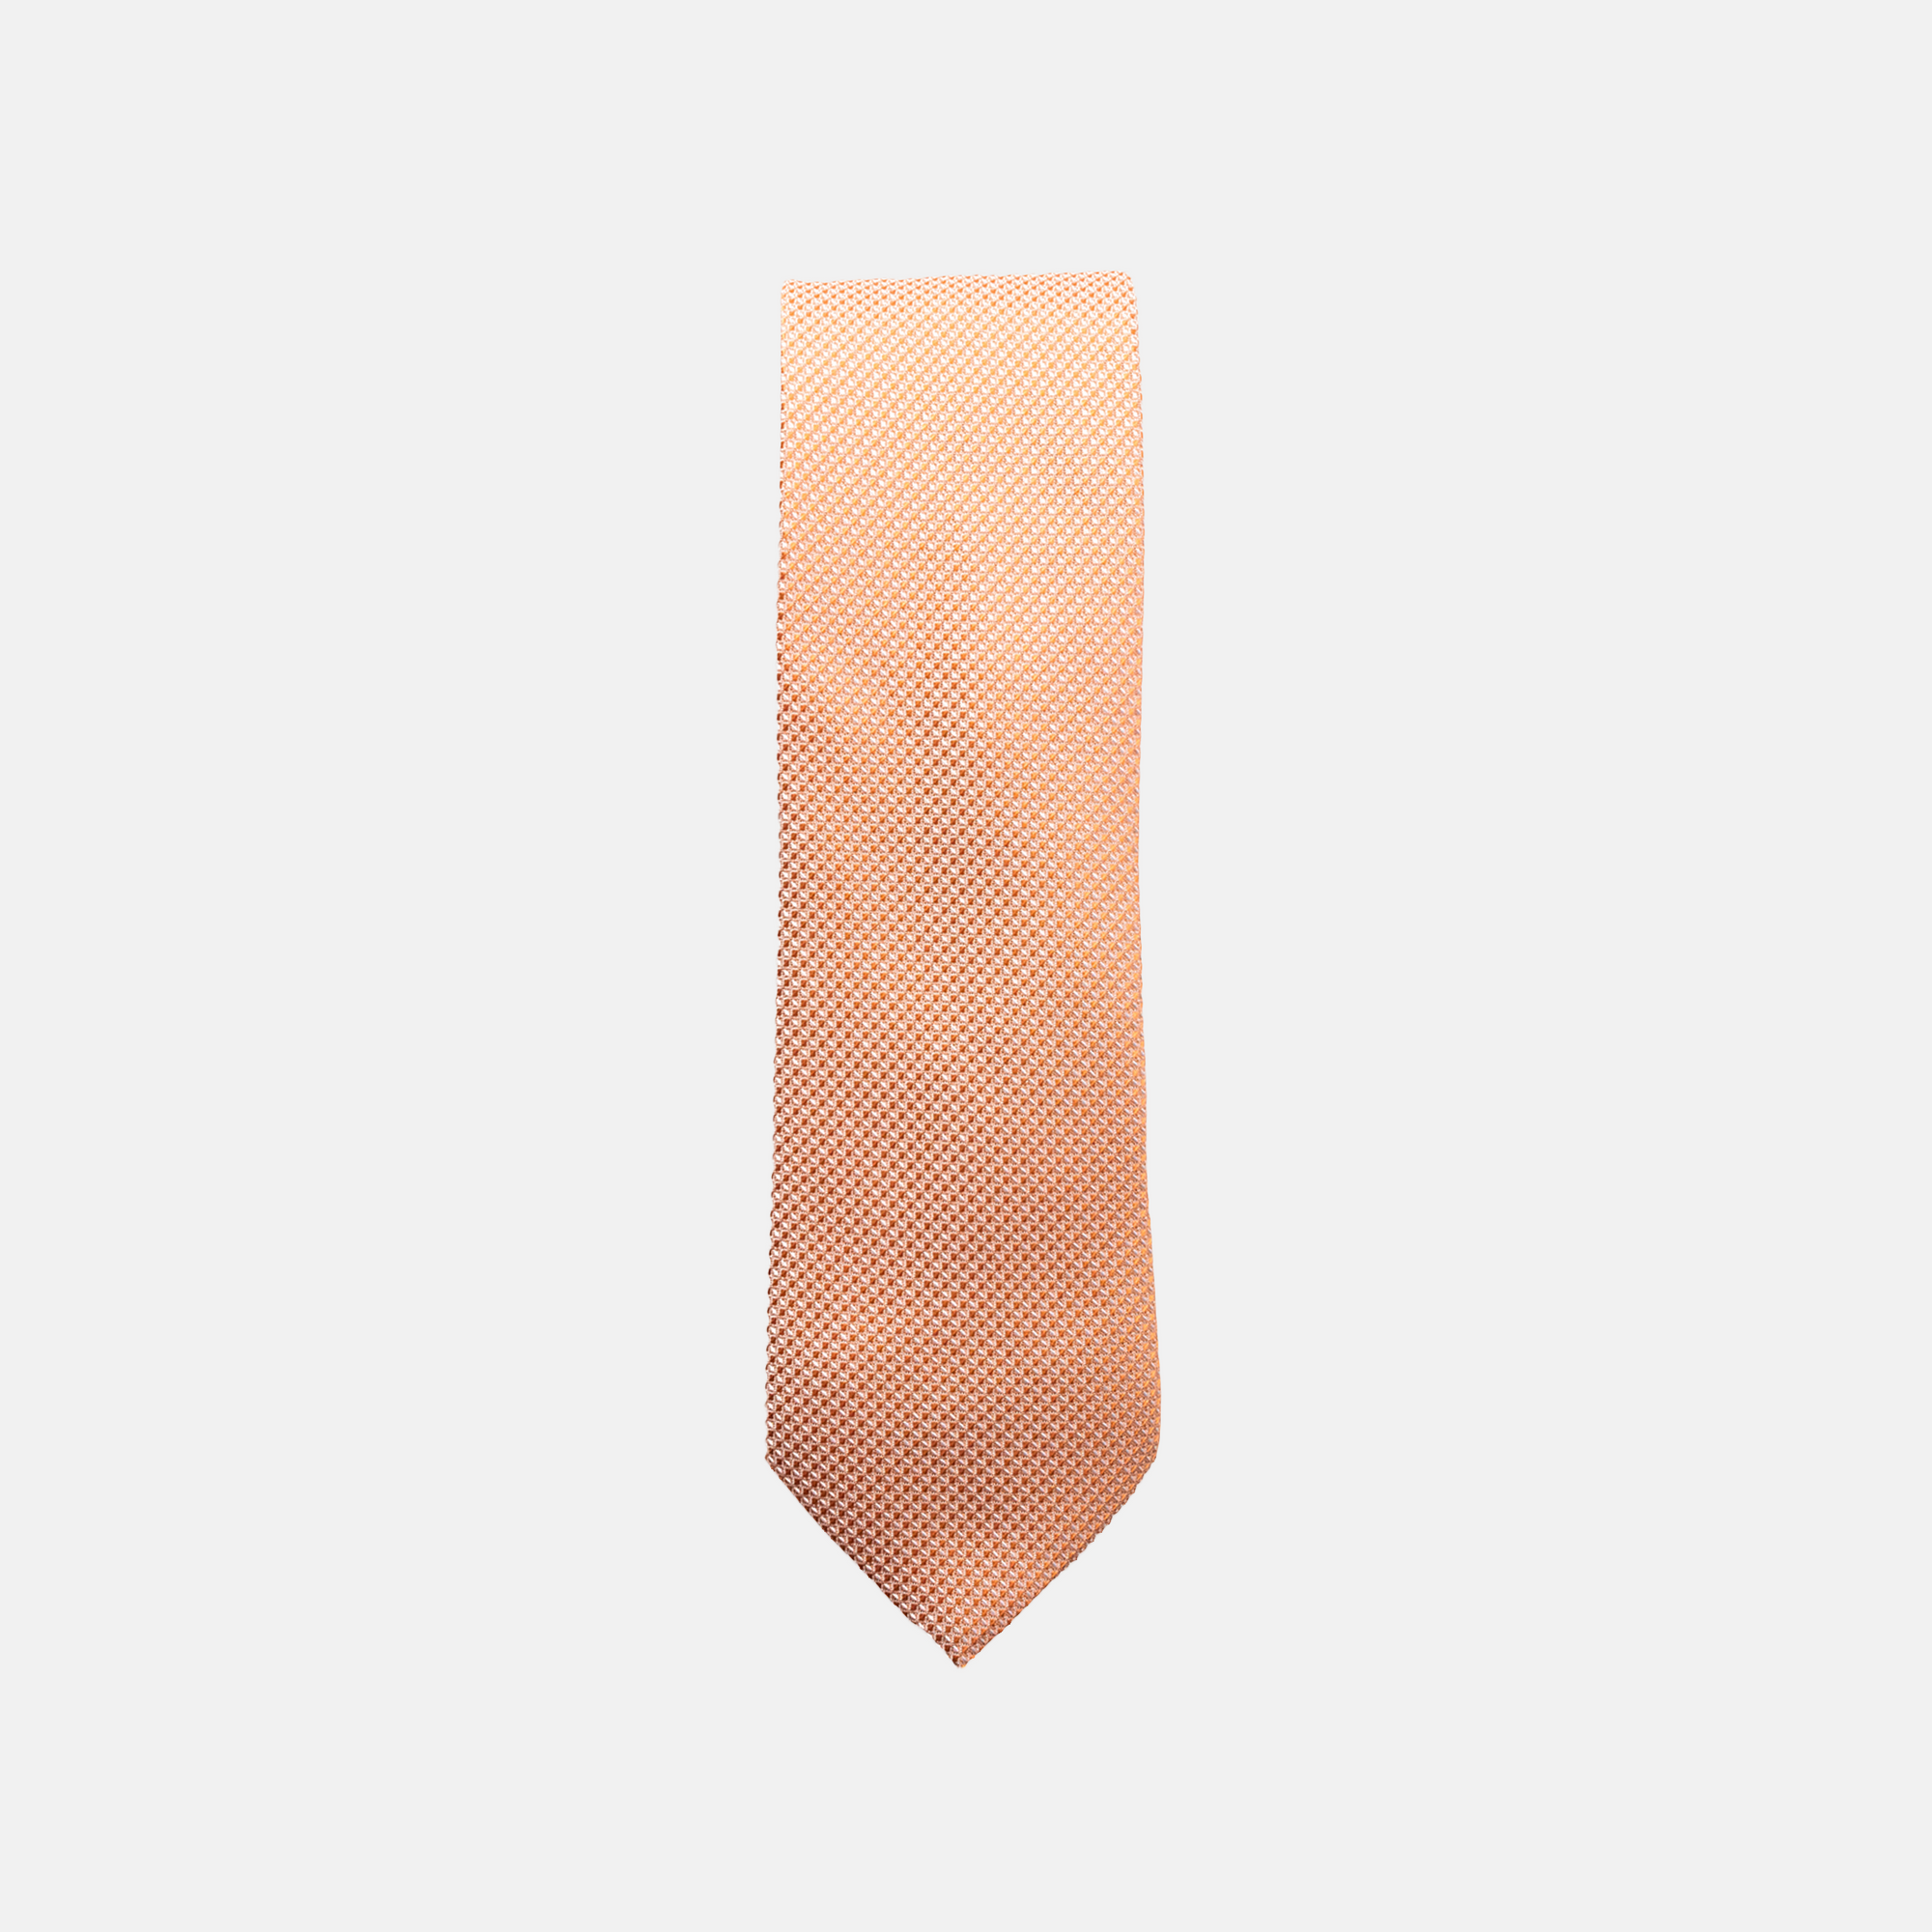 LEVI - Men's Tie